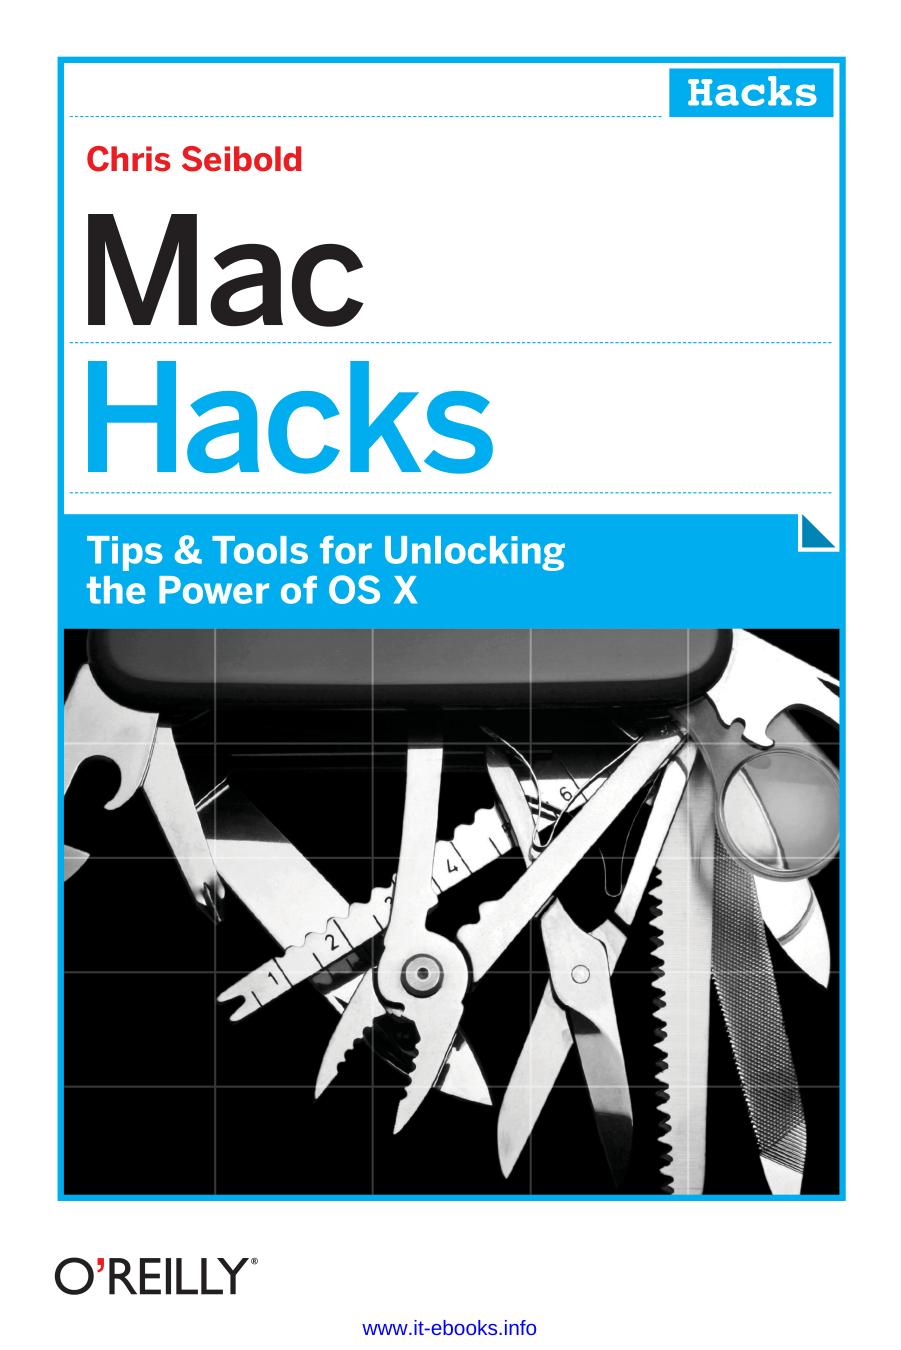 Mac Hacks by Chris Seibold